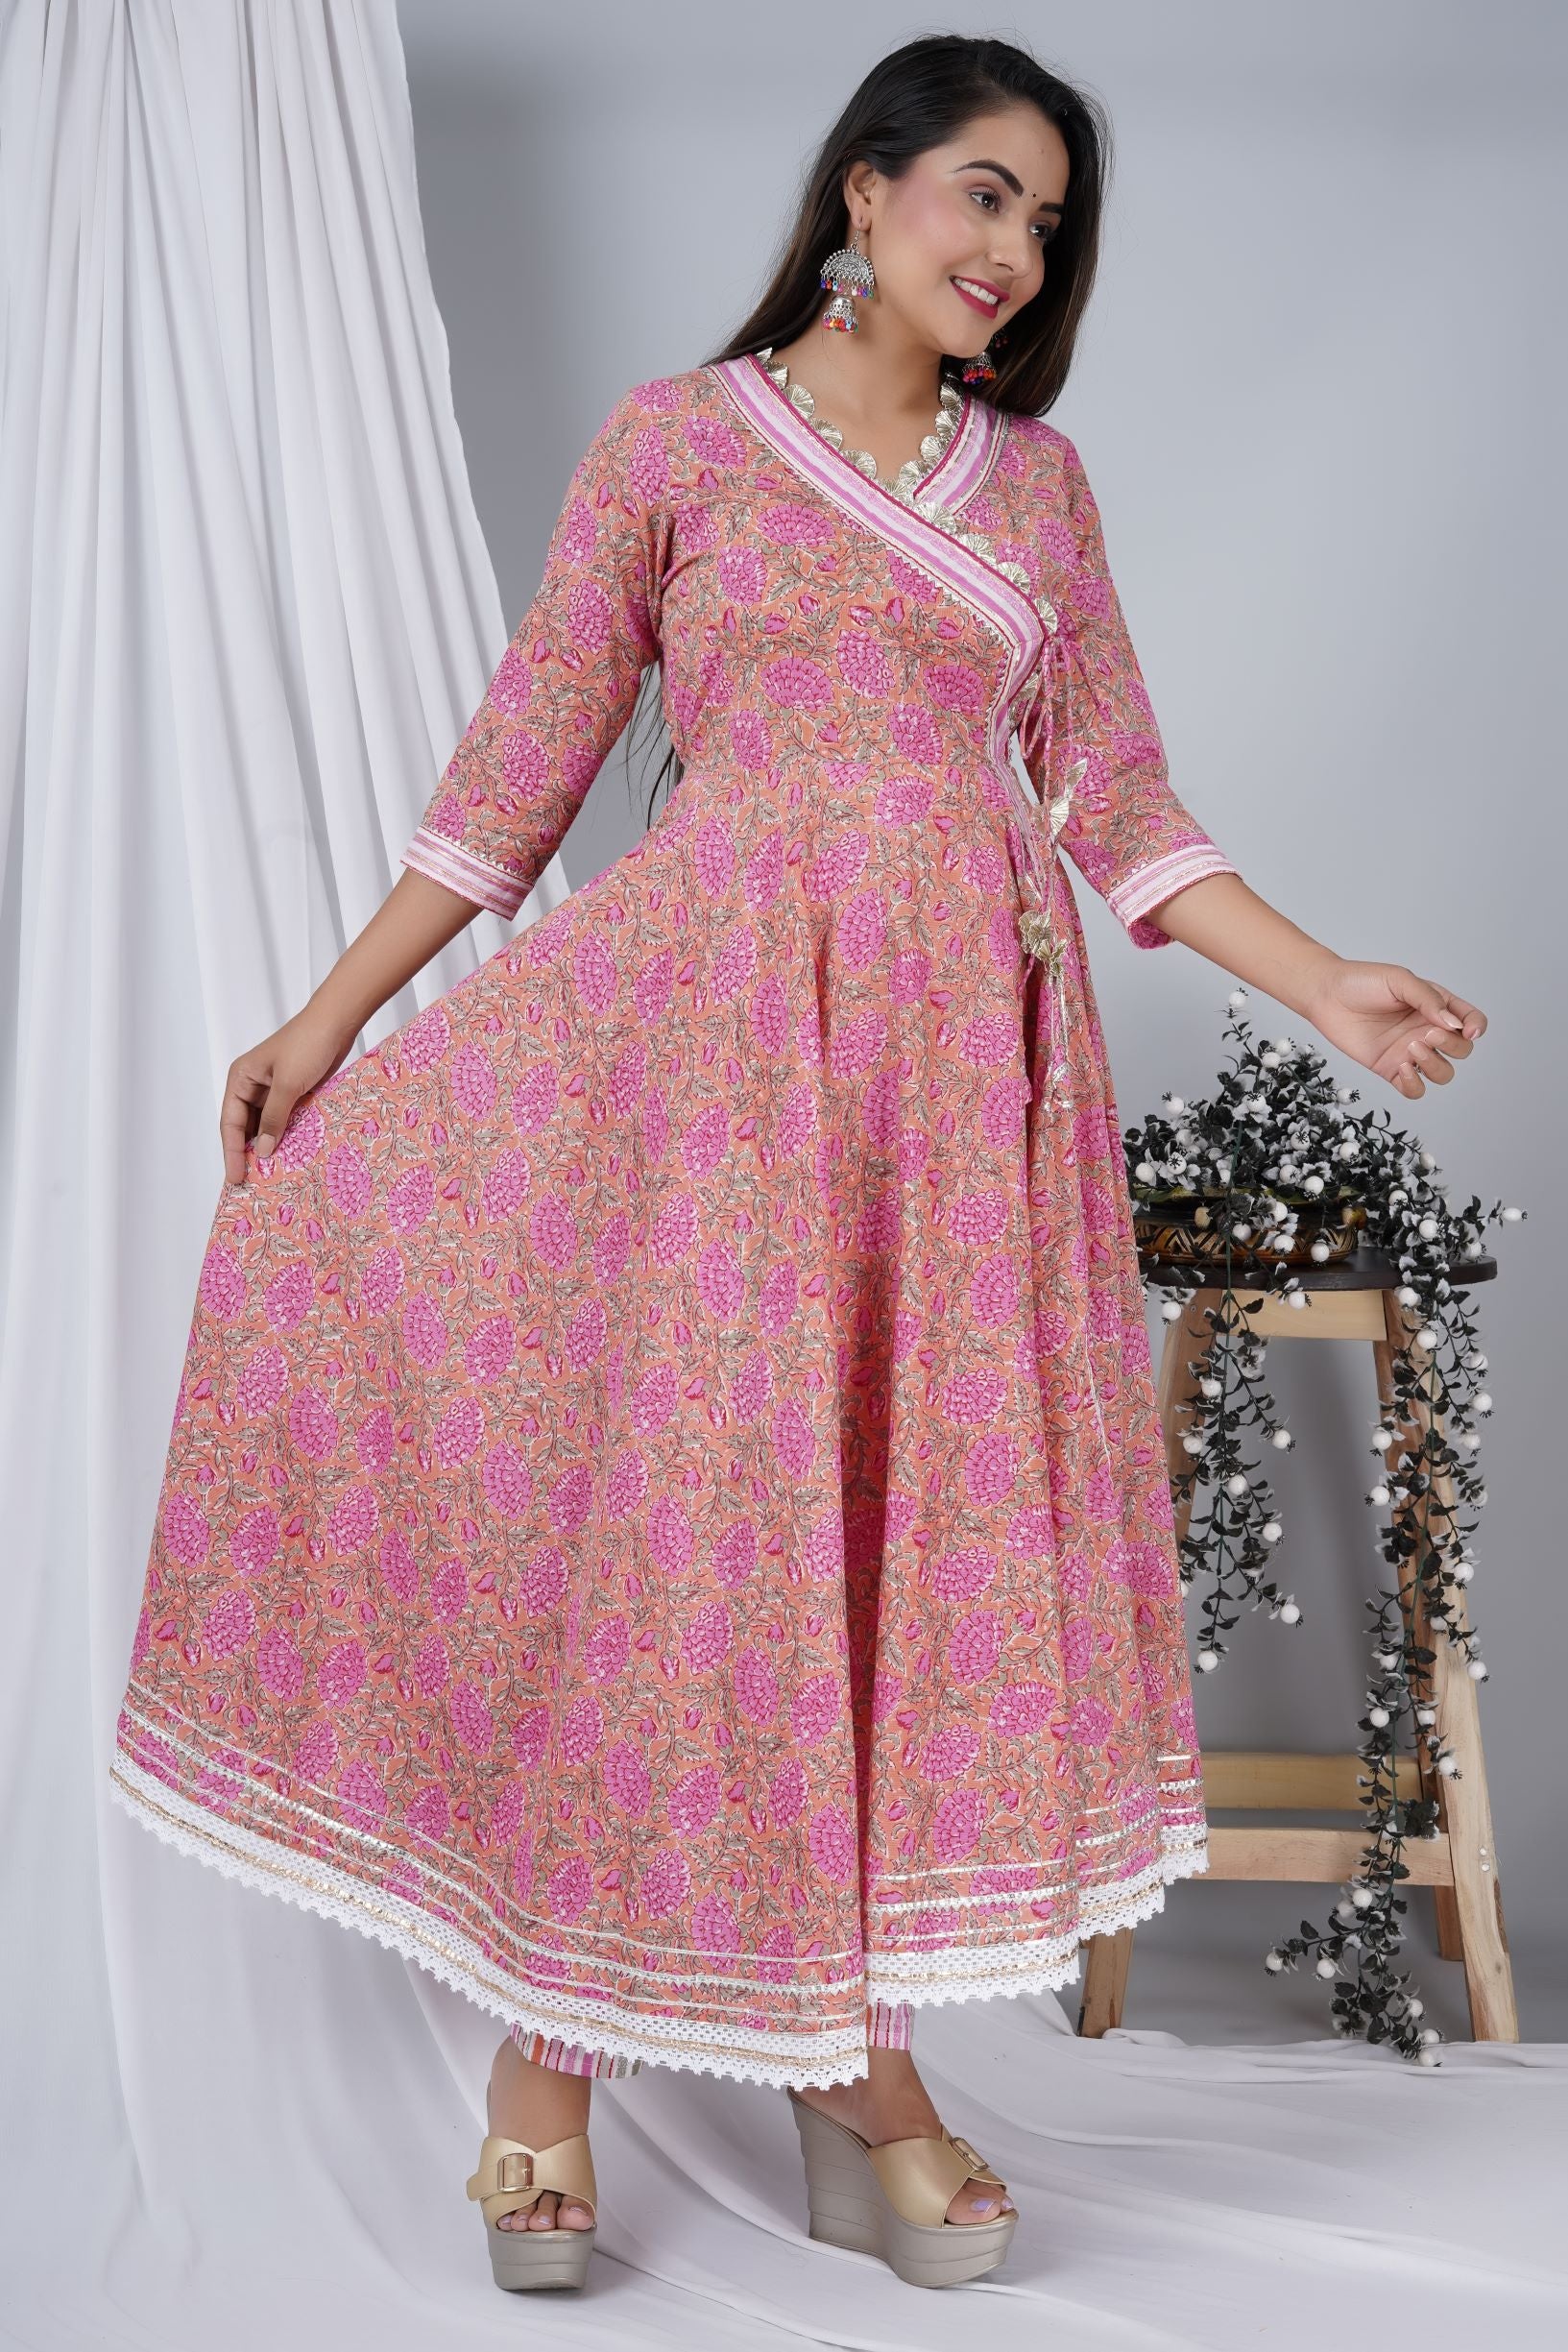 New Fair Trade Printed Cotton Umbrella Dress 14 16 18 Hippy Boho Ethnic  India | eBay